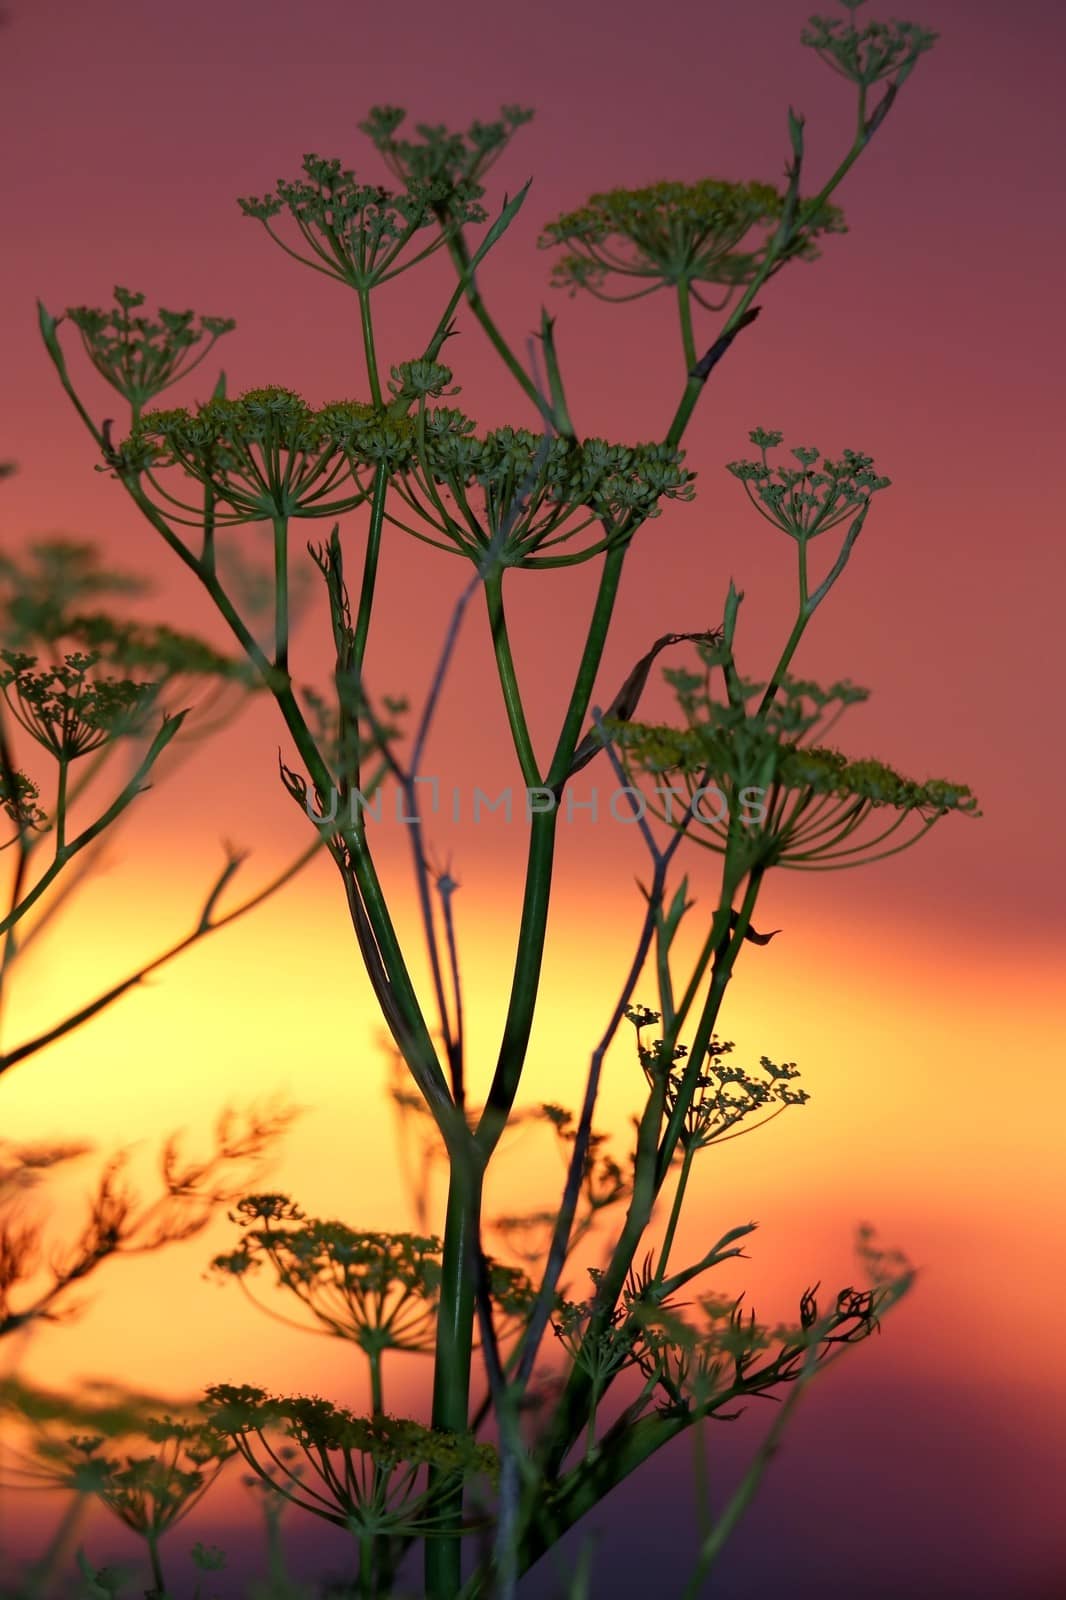 Green plant against the orange sunset sky